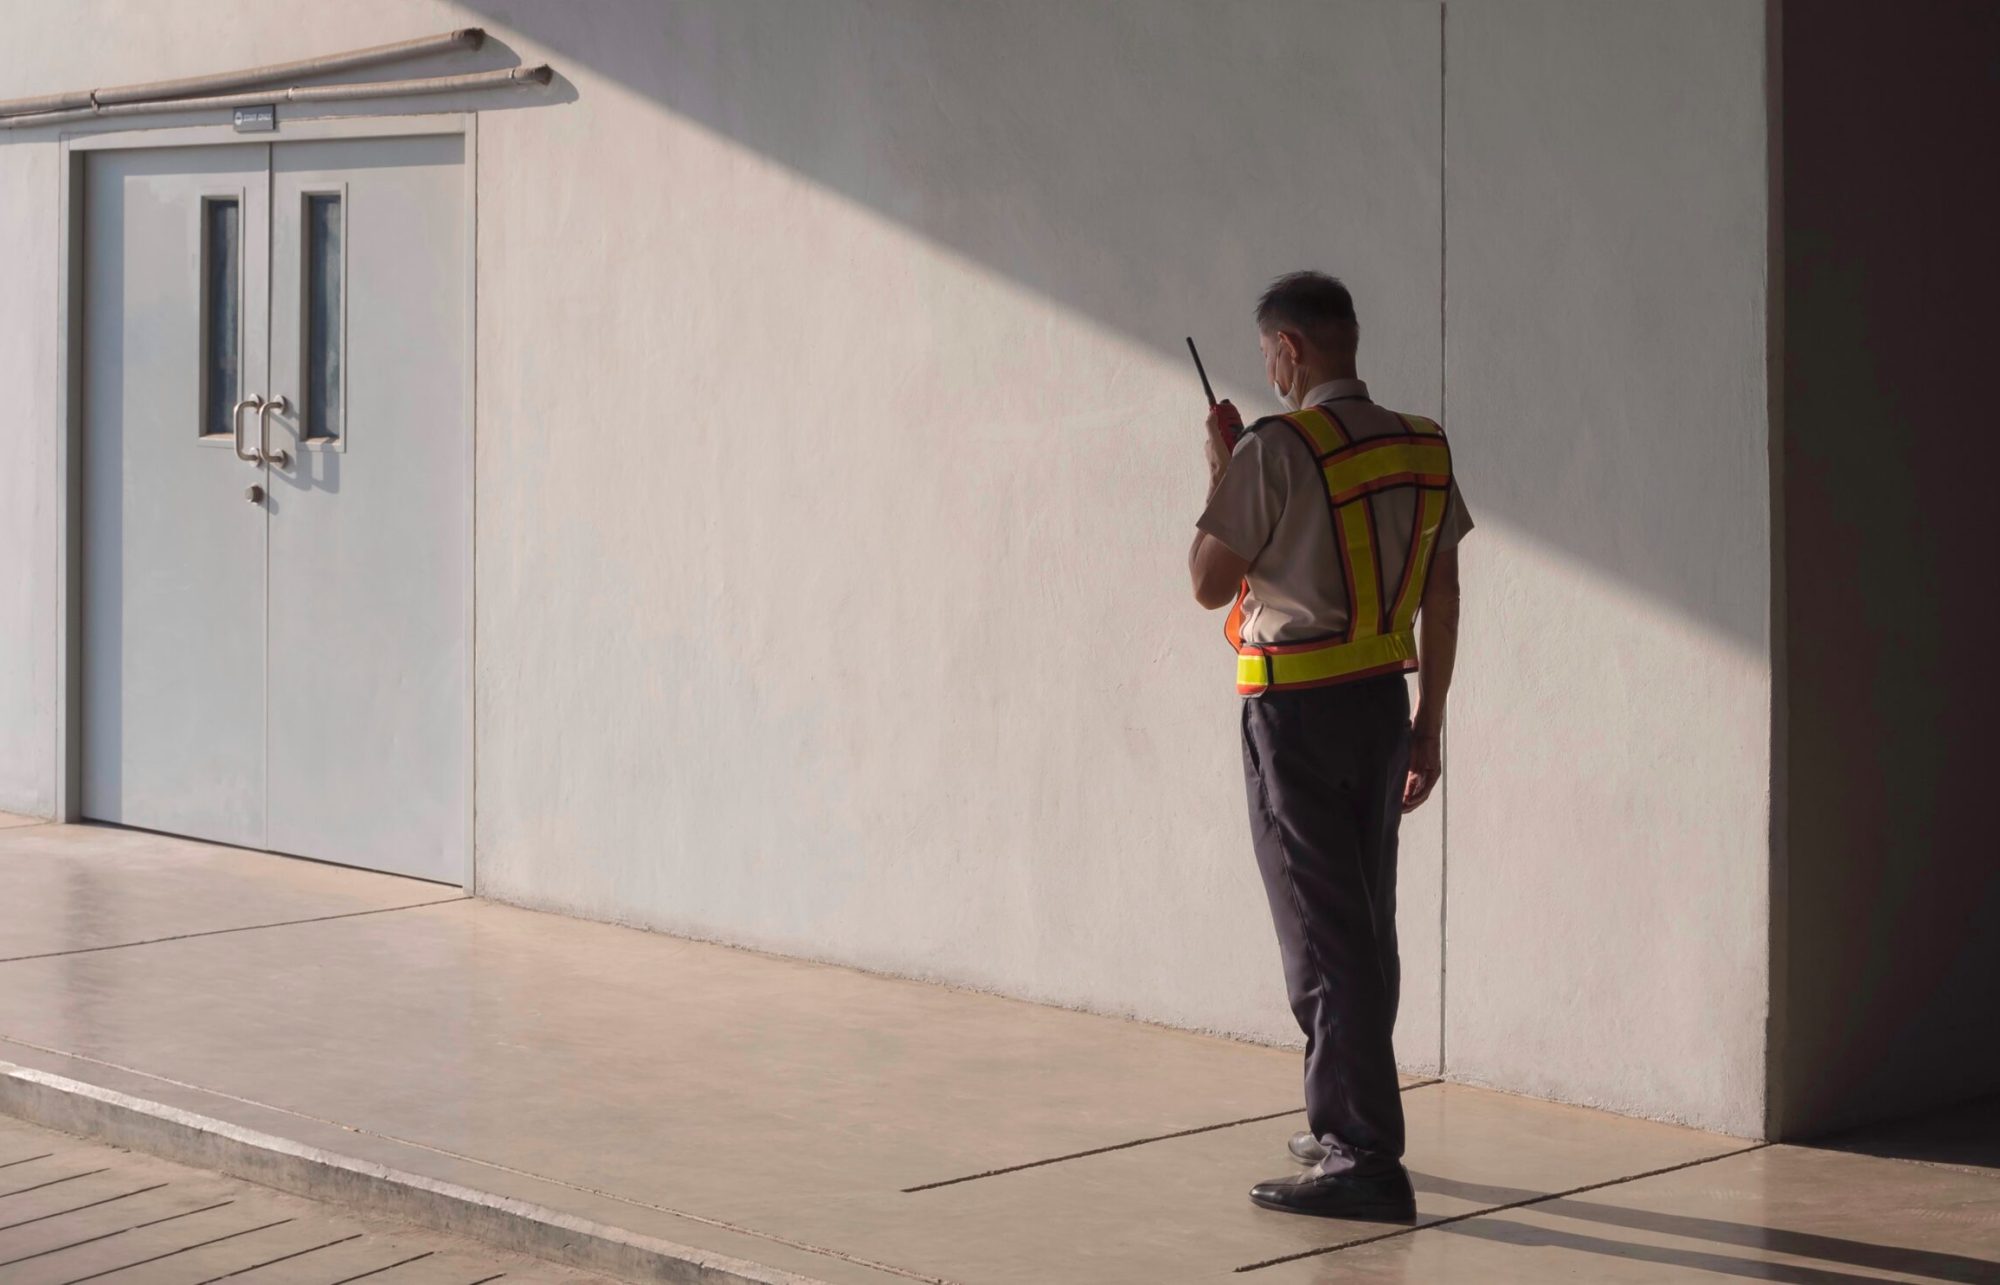 security-guard-using-walkie-talkie-while-working-i-2022-11-04-00-19-45-utc